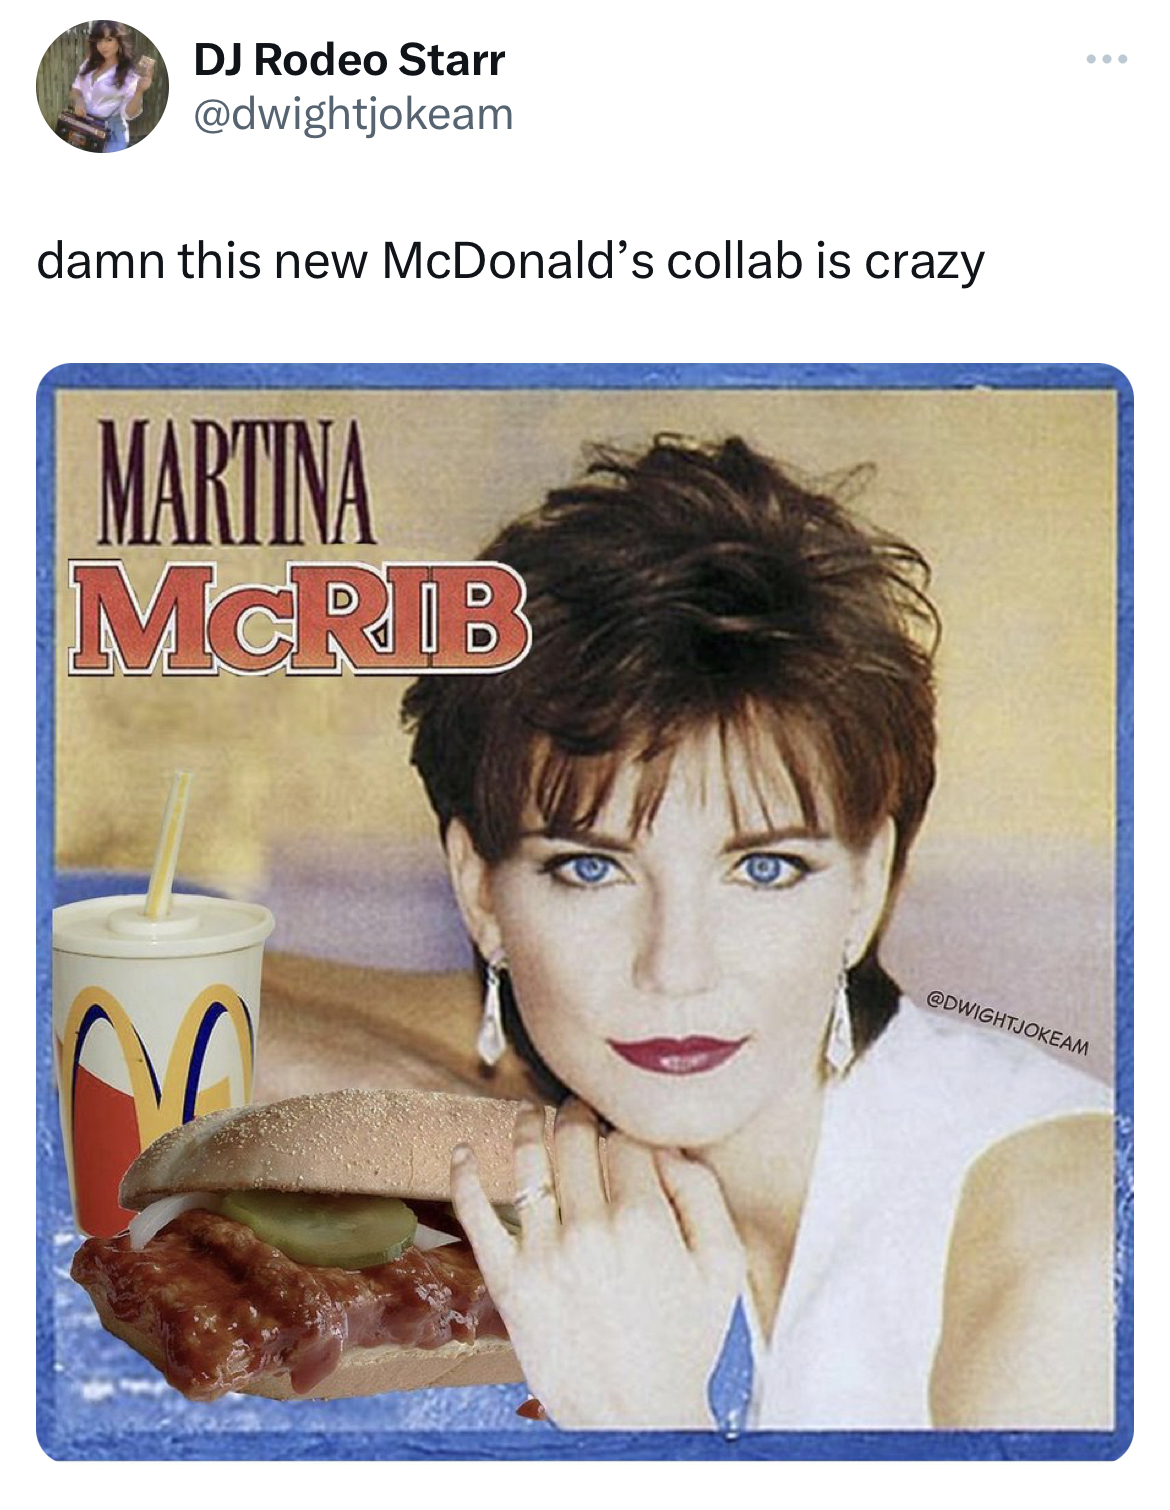 savage and funny tweets -martina mcbride album covers - Dj Rodeo Starr damn this new McDonald's collab is crazy Martina Mcrib Gownshokeam